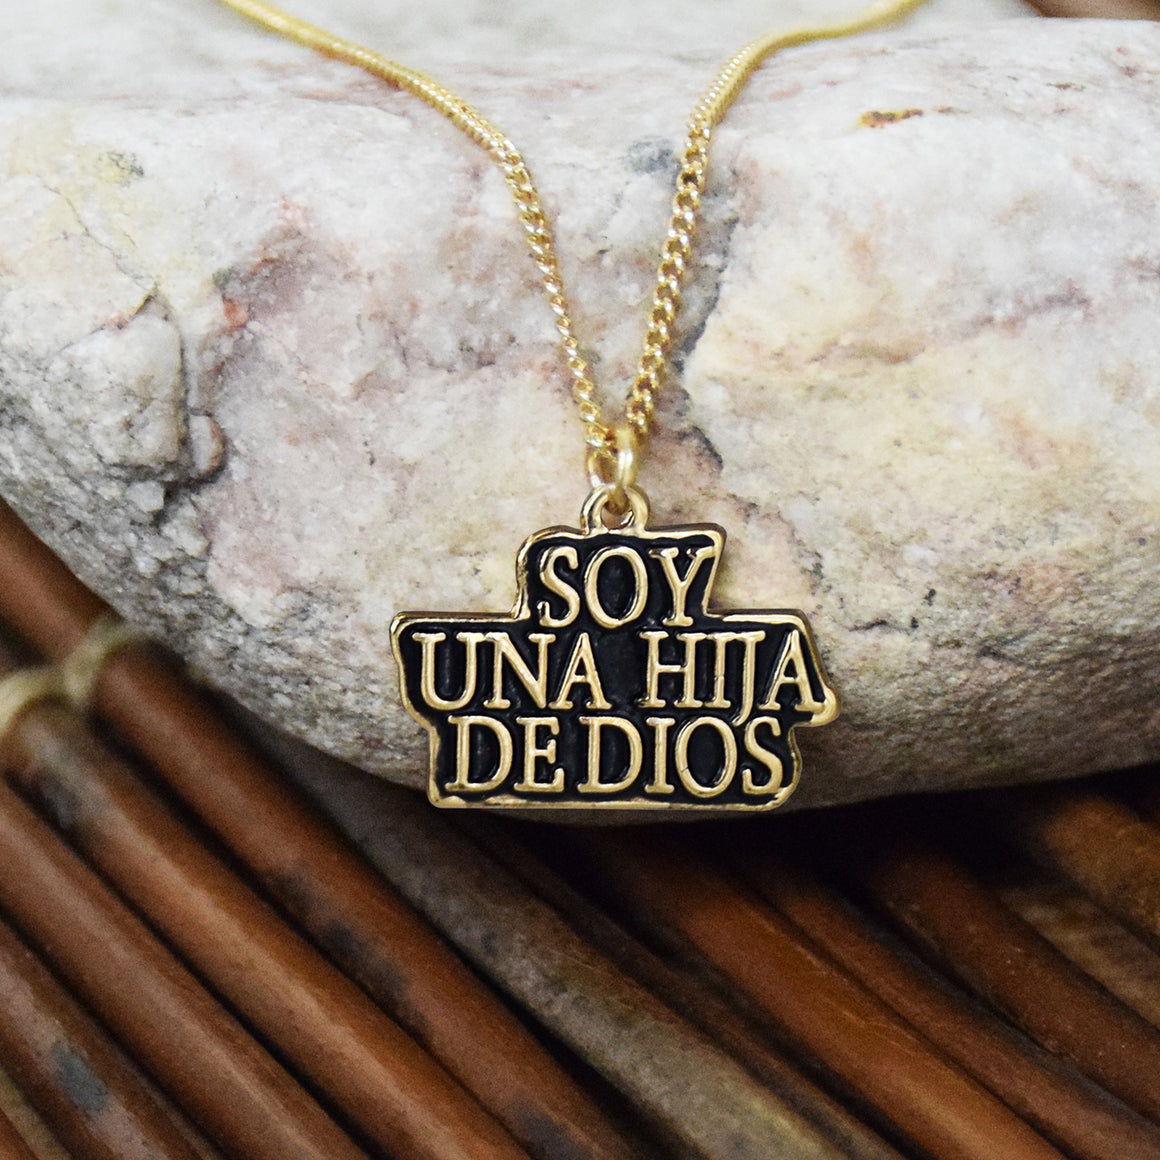 Soy Una Hija de Dios - Spanish - I Am A Child of God gold finish necklace